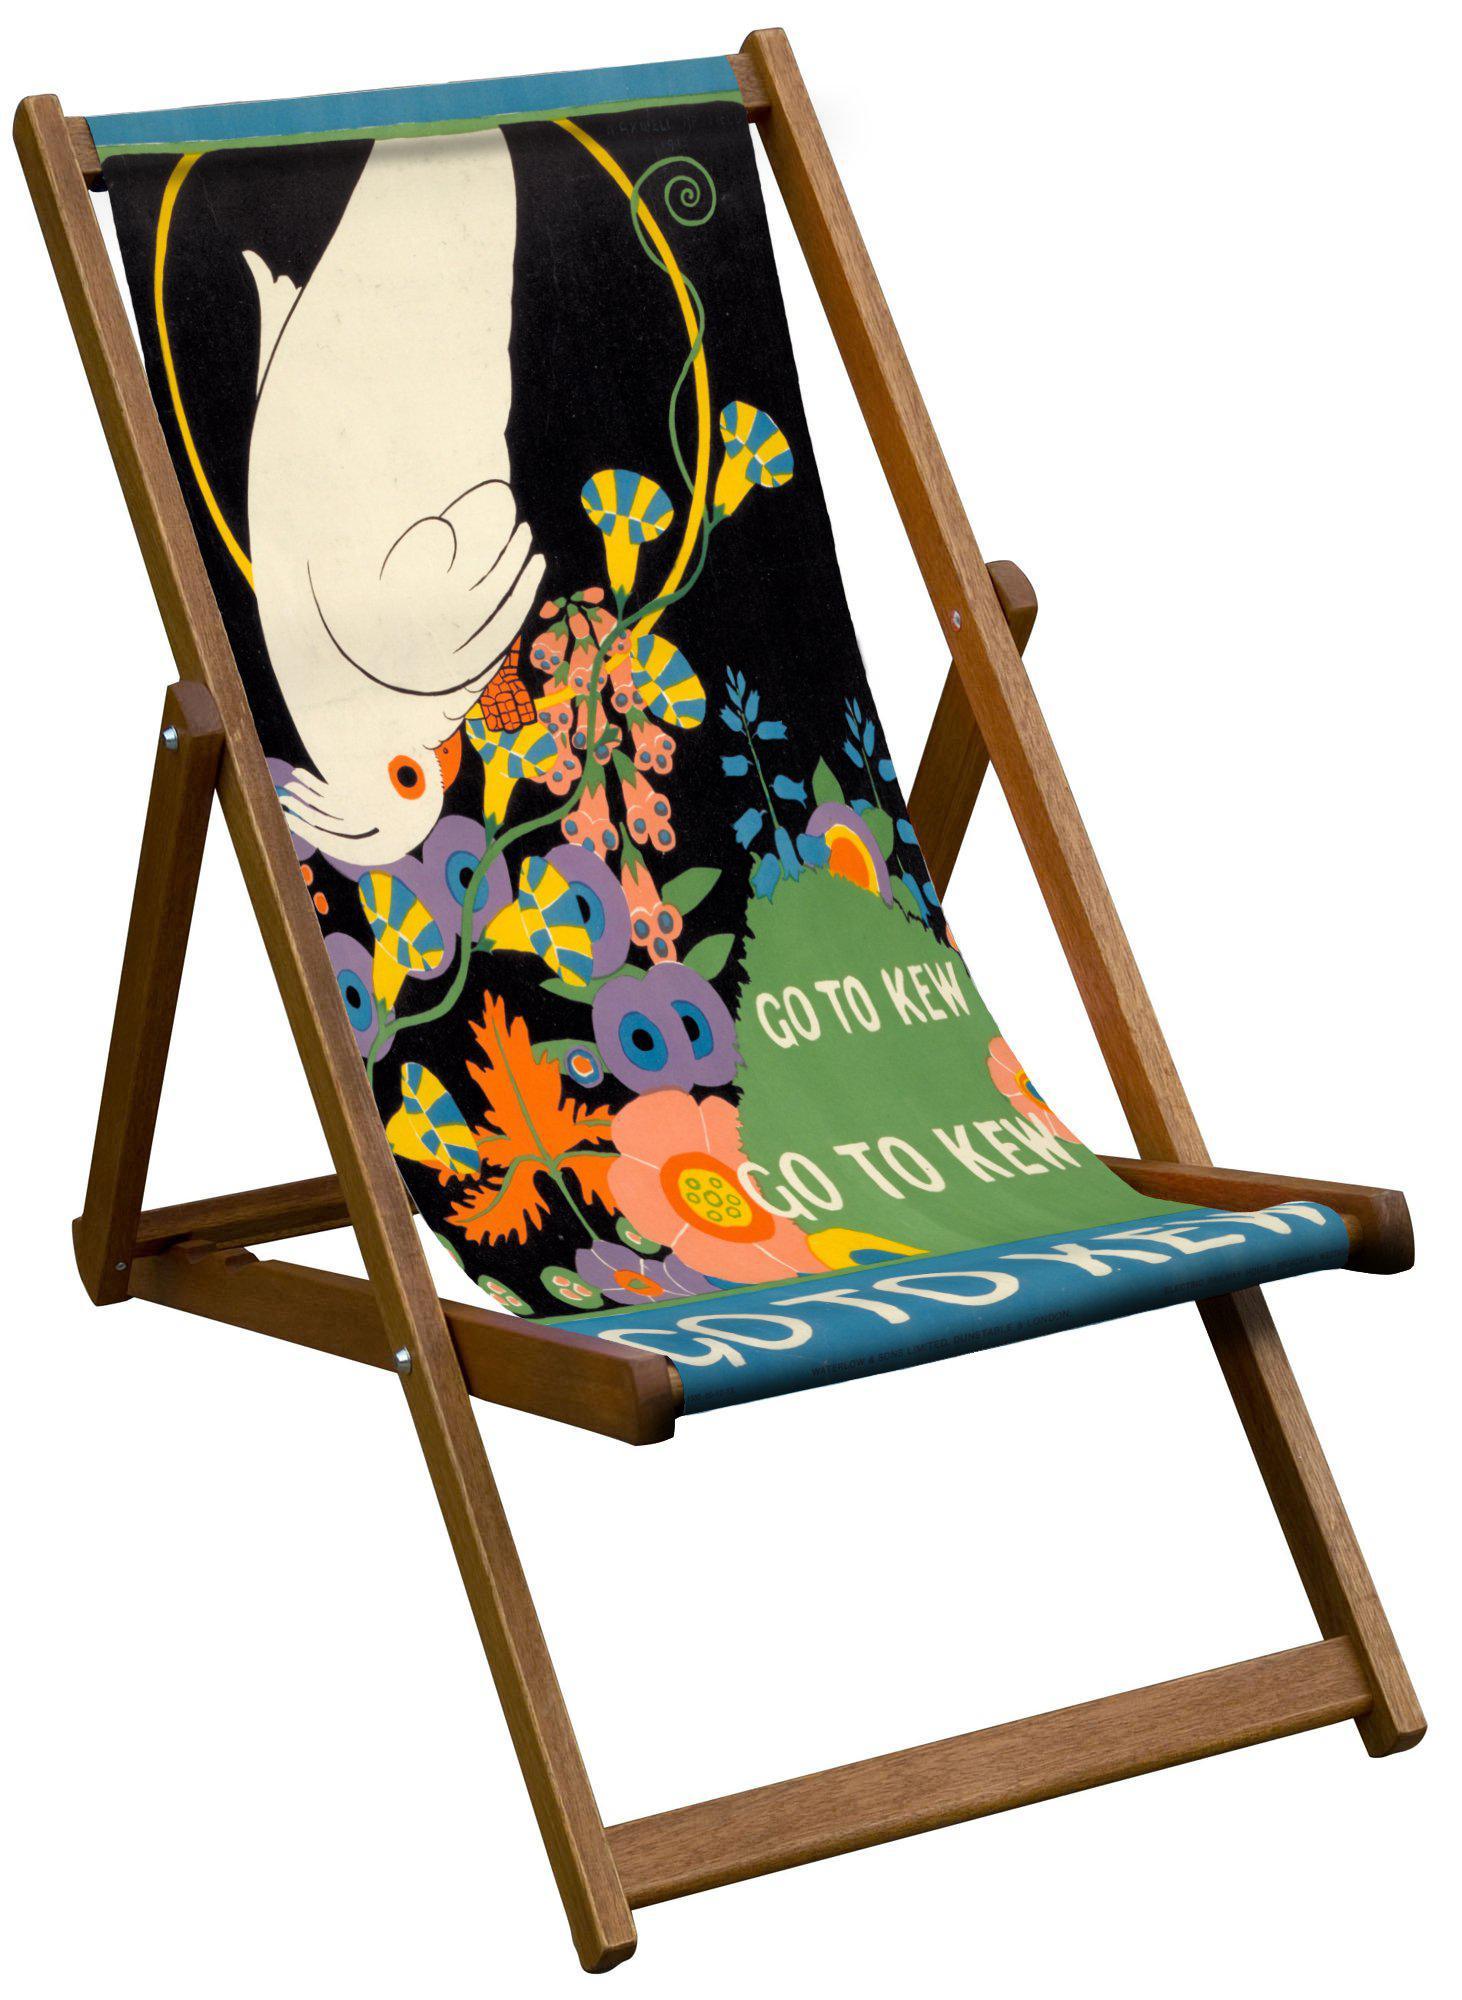 Go to Kew - London Transport Poster Deckchair